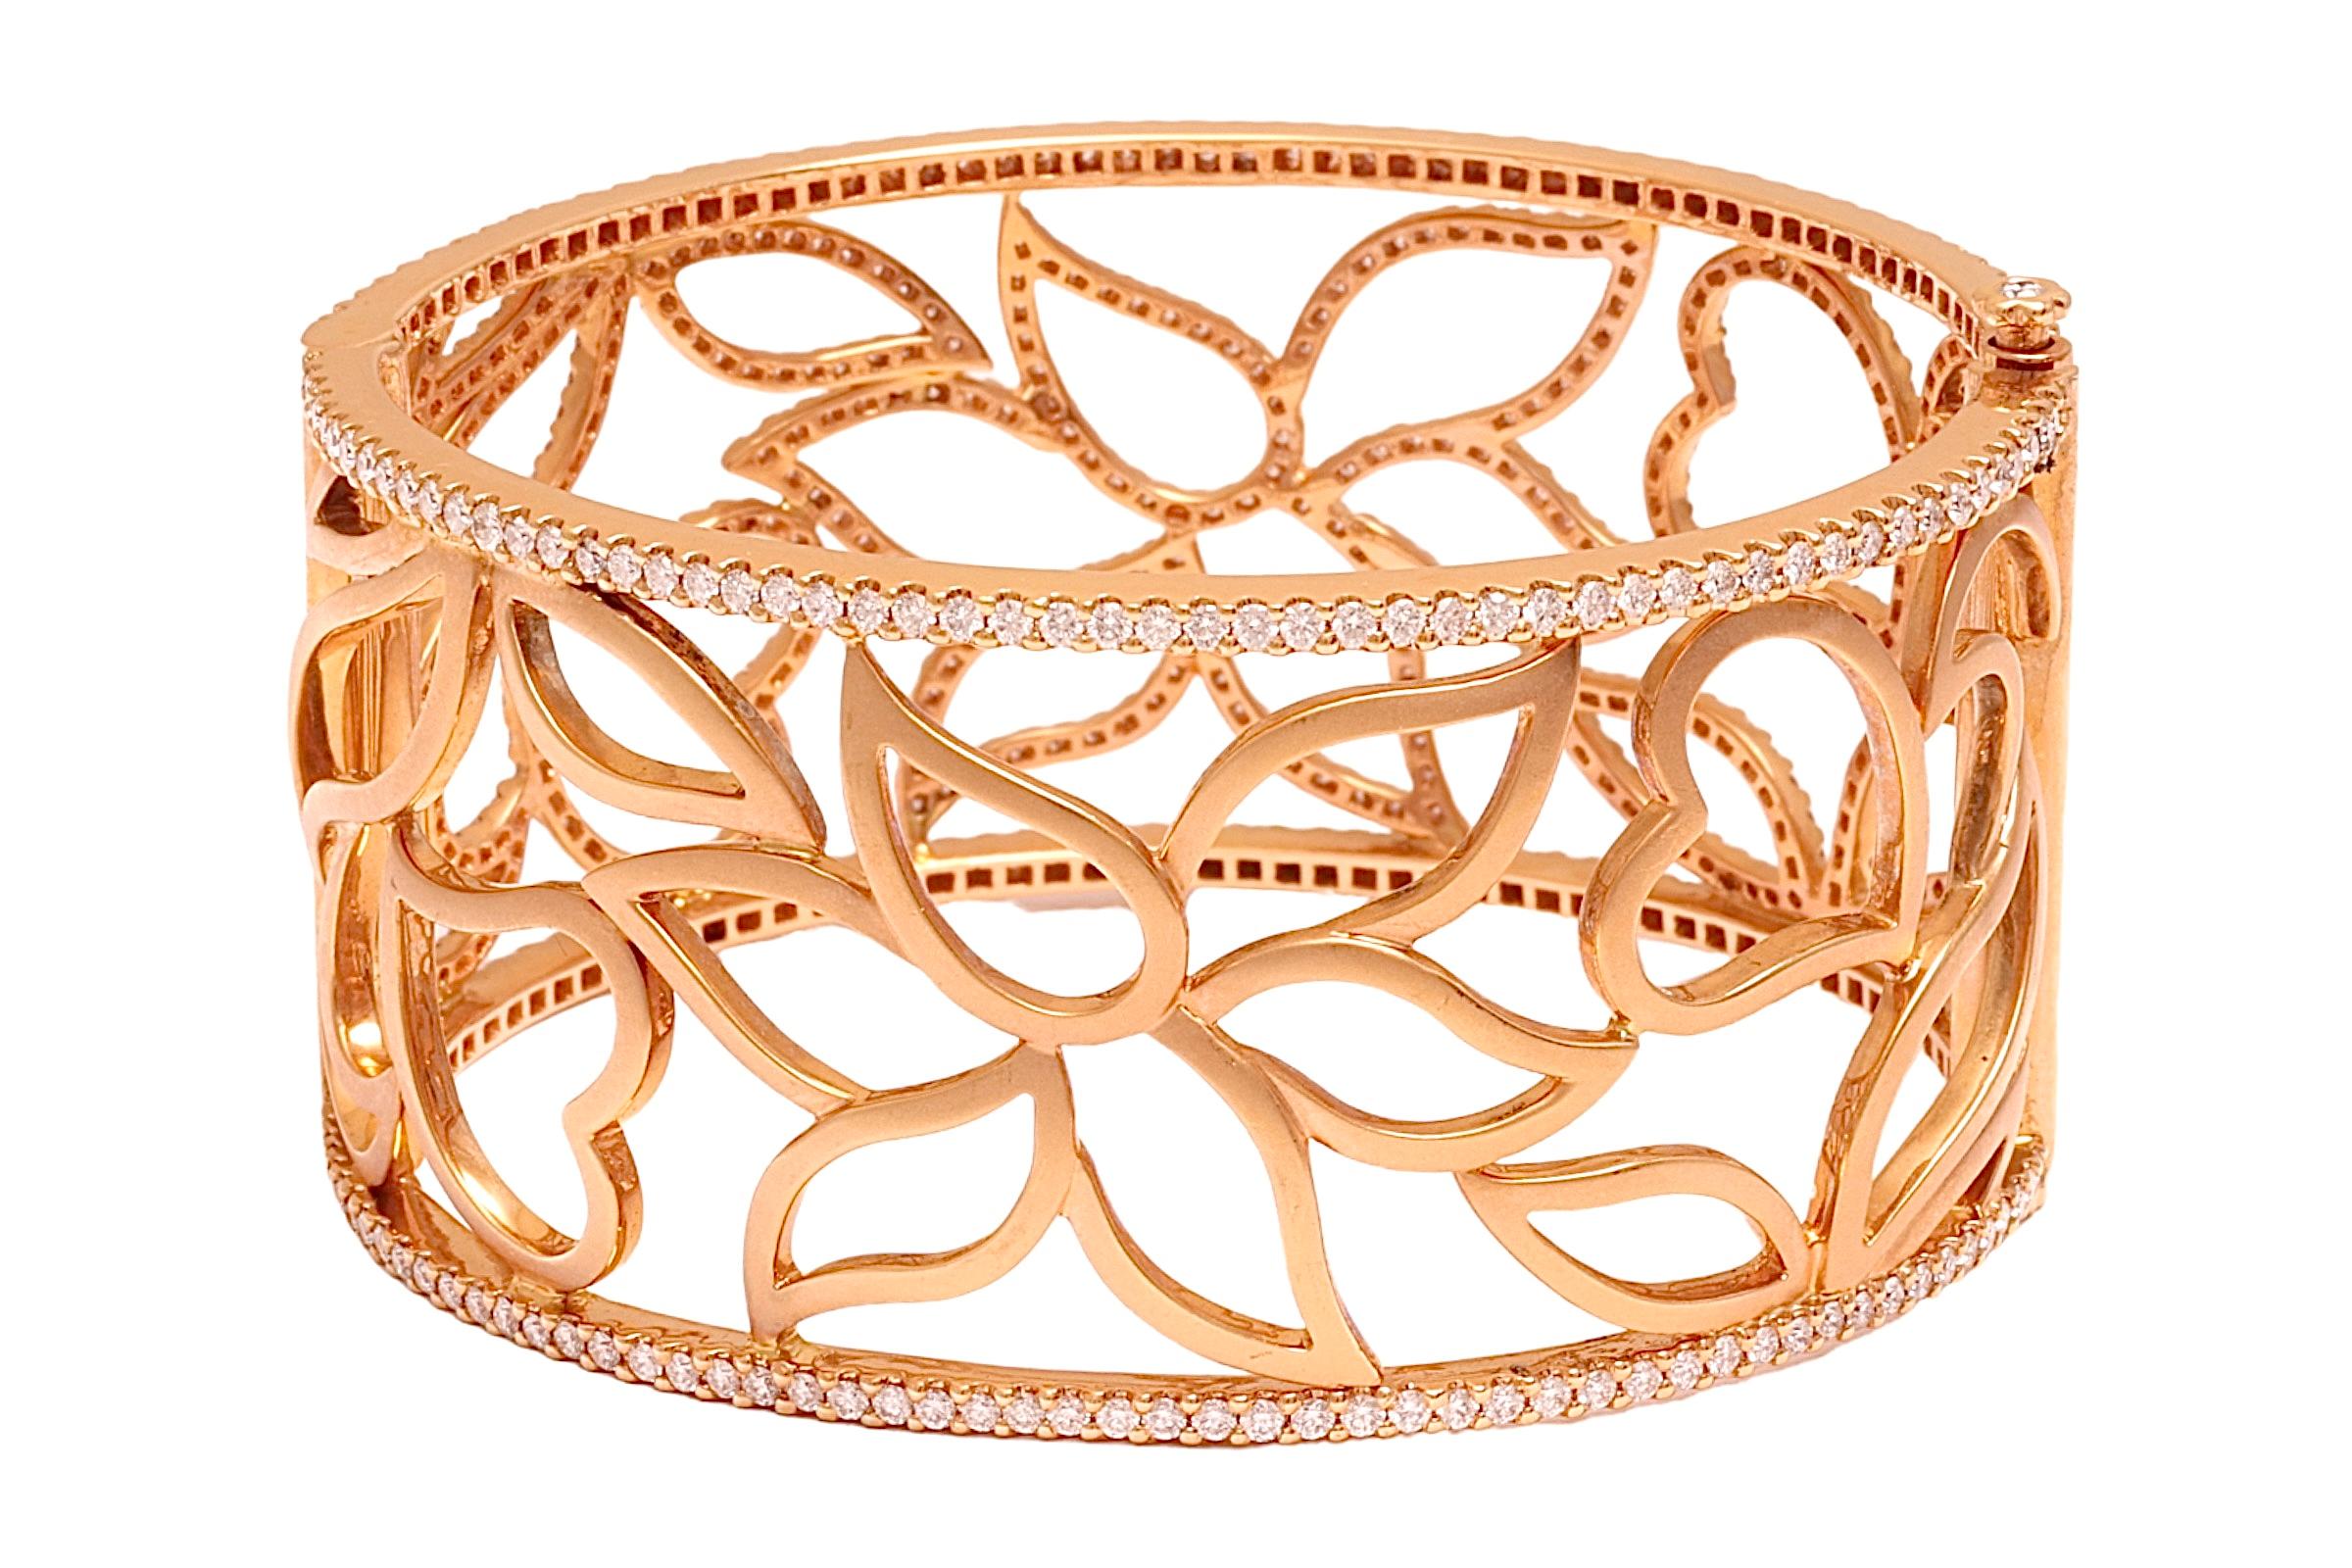 18kt Pink Gold Cuff Bracelet, Flower Design, set with 5.87 ct. Diamonds, 2 Sided For Sale 6